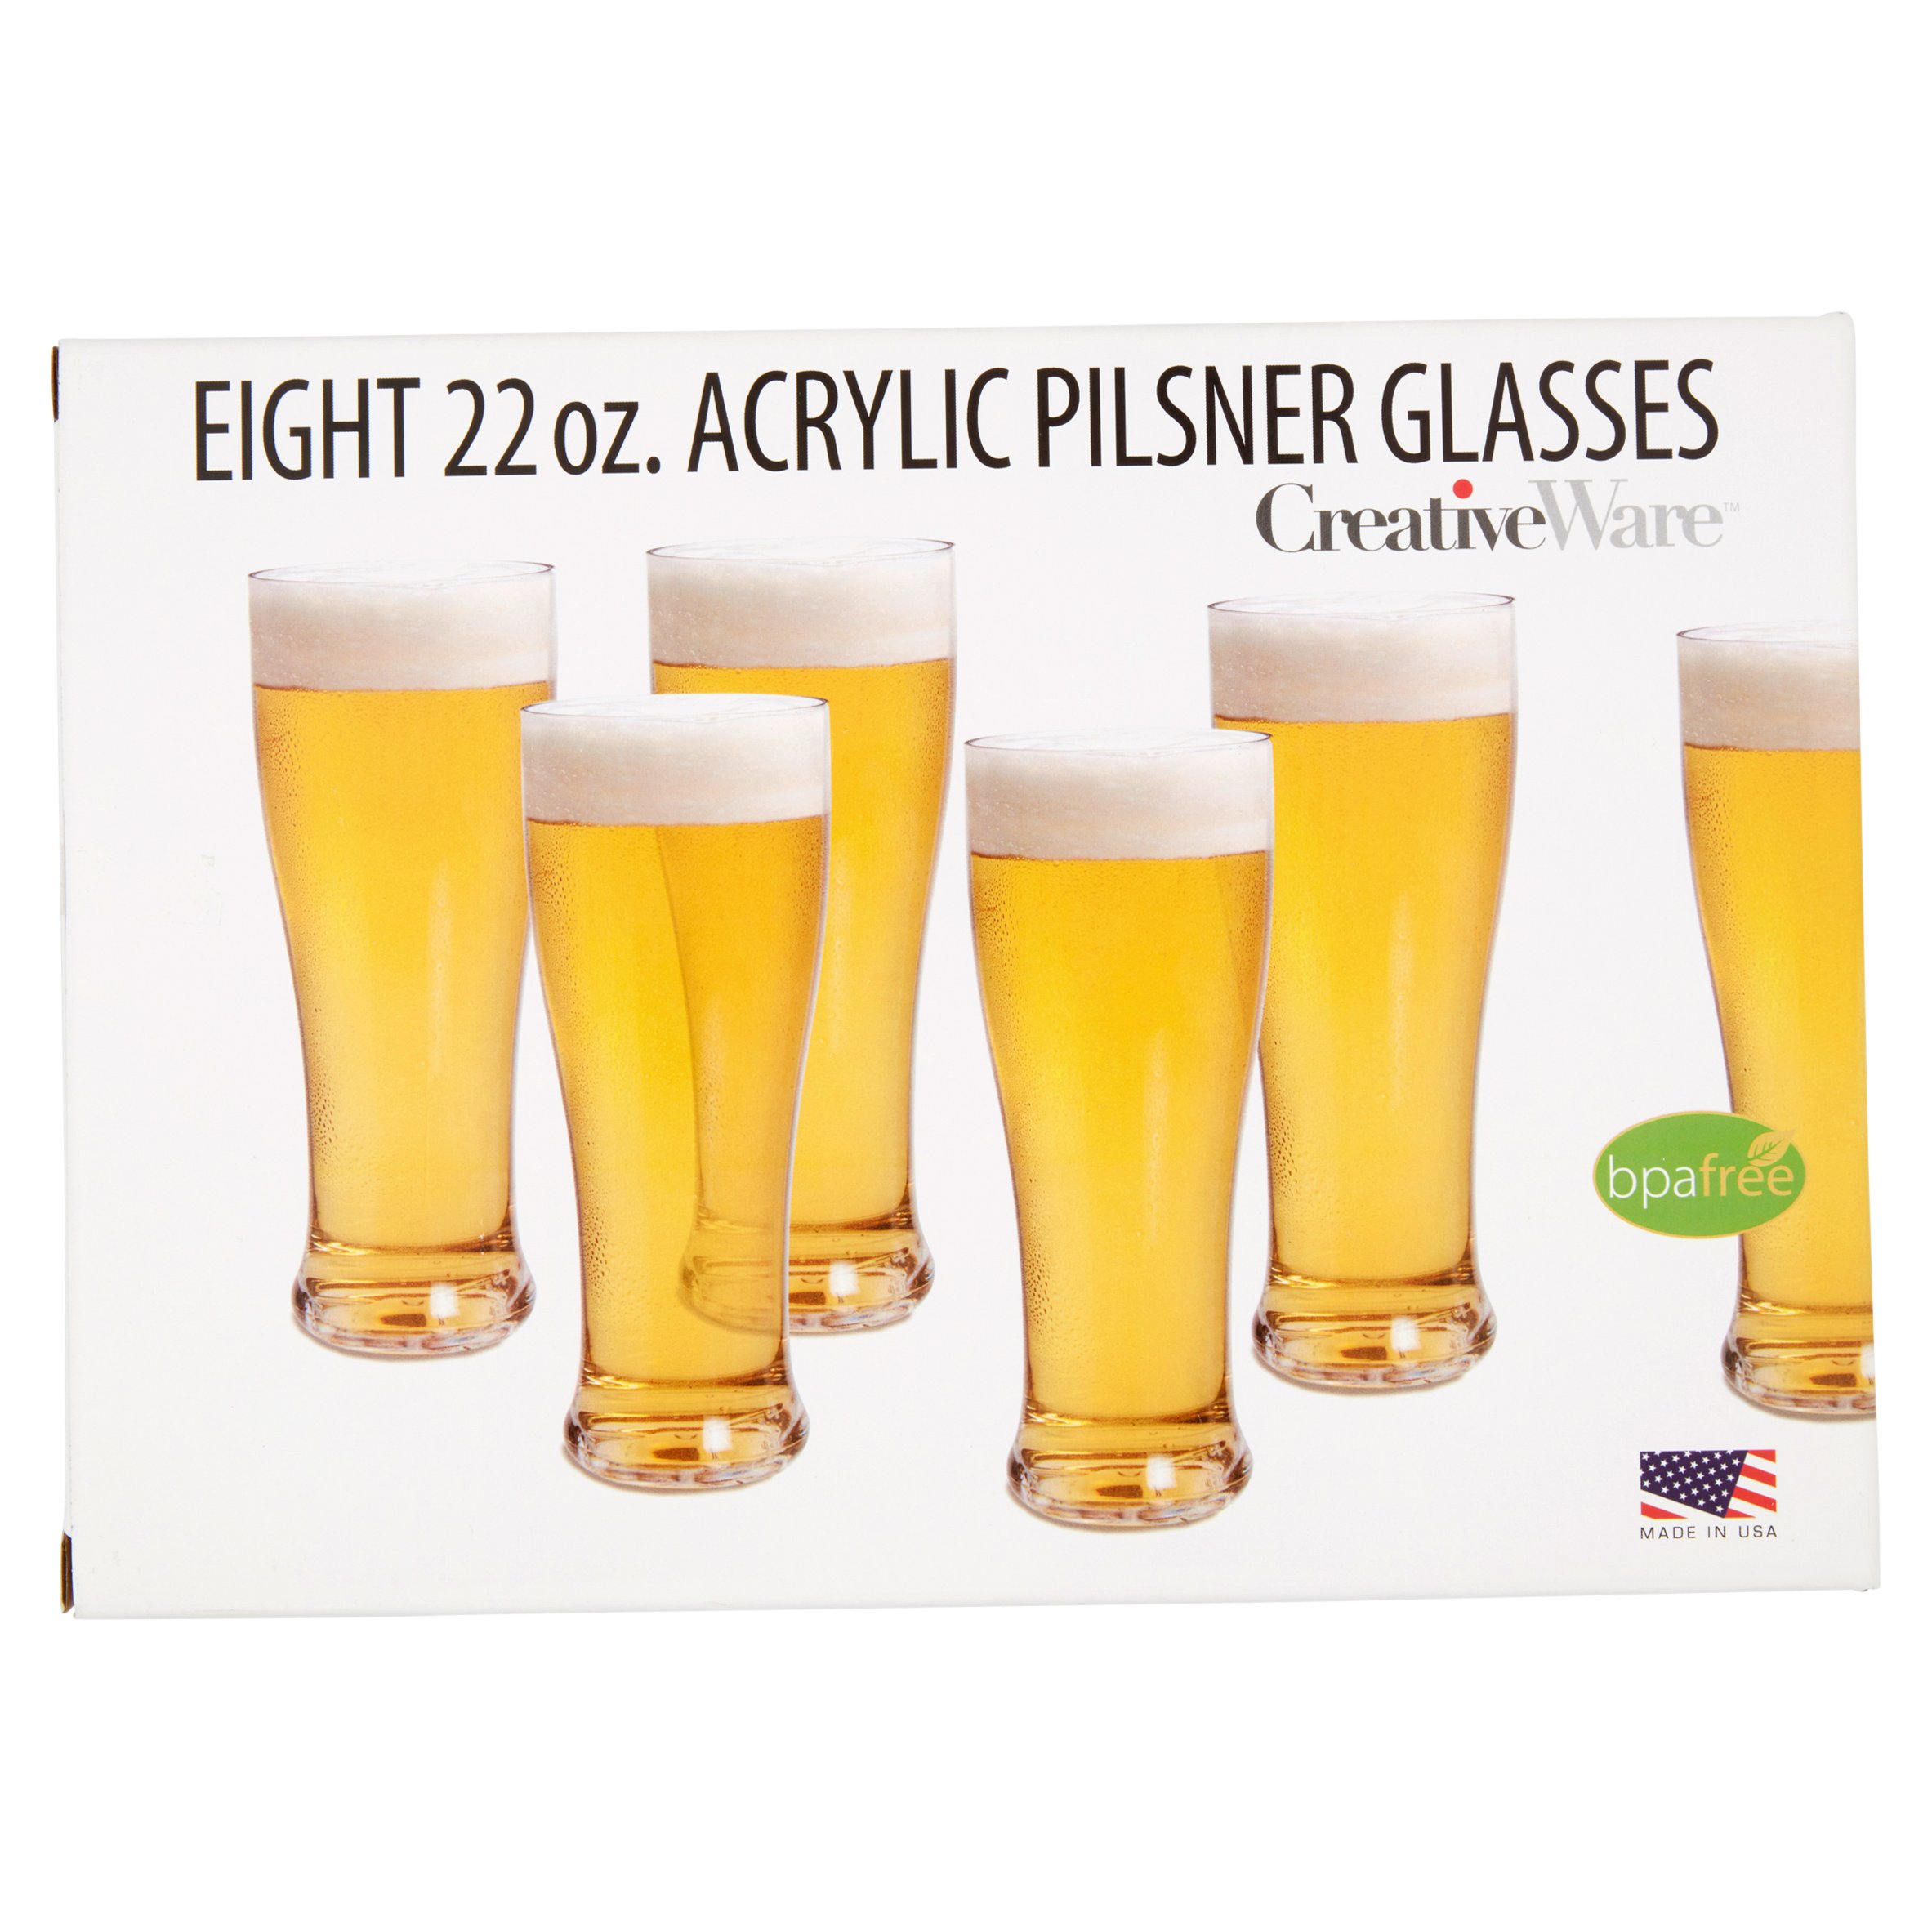 Creative Ware 22 oz. Eight Acrylic Pilsner Glasses - image 4 of 5